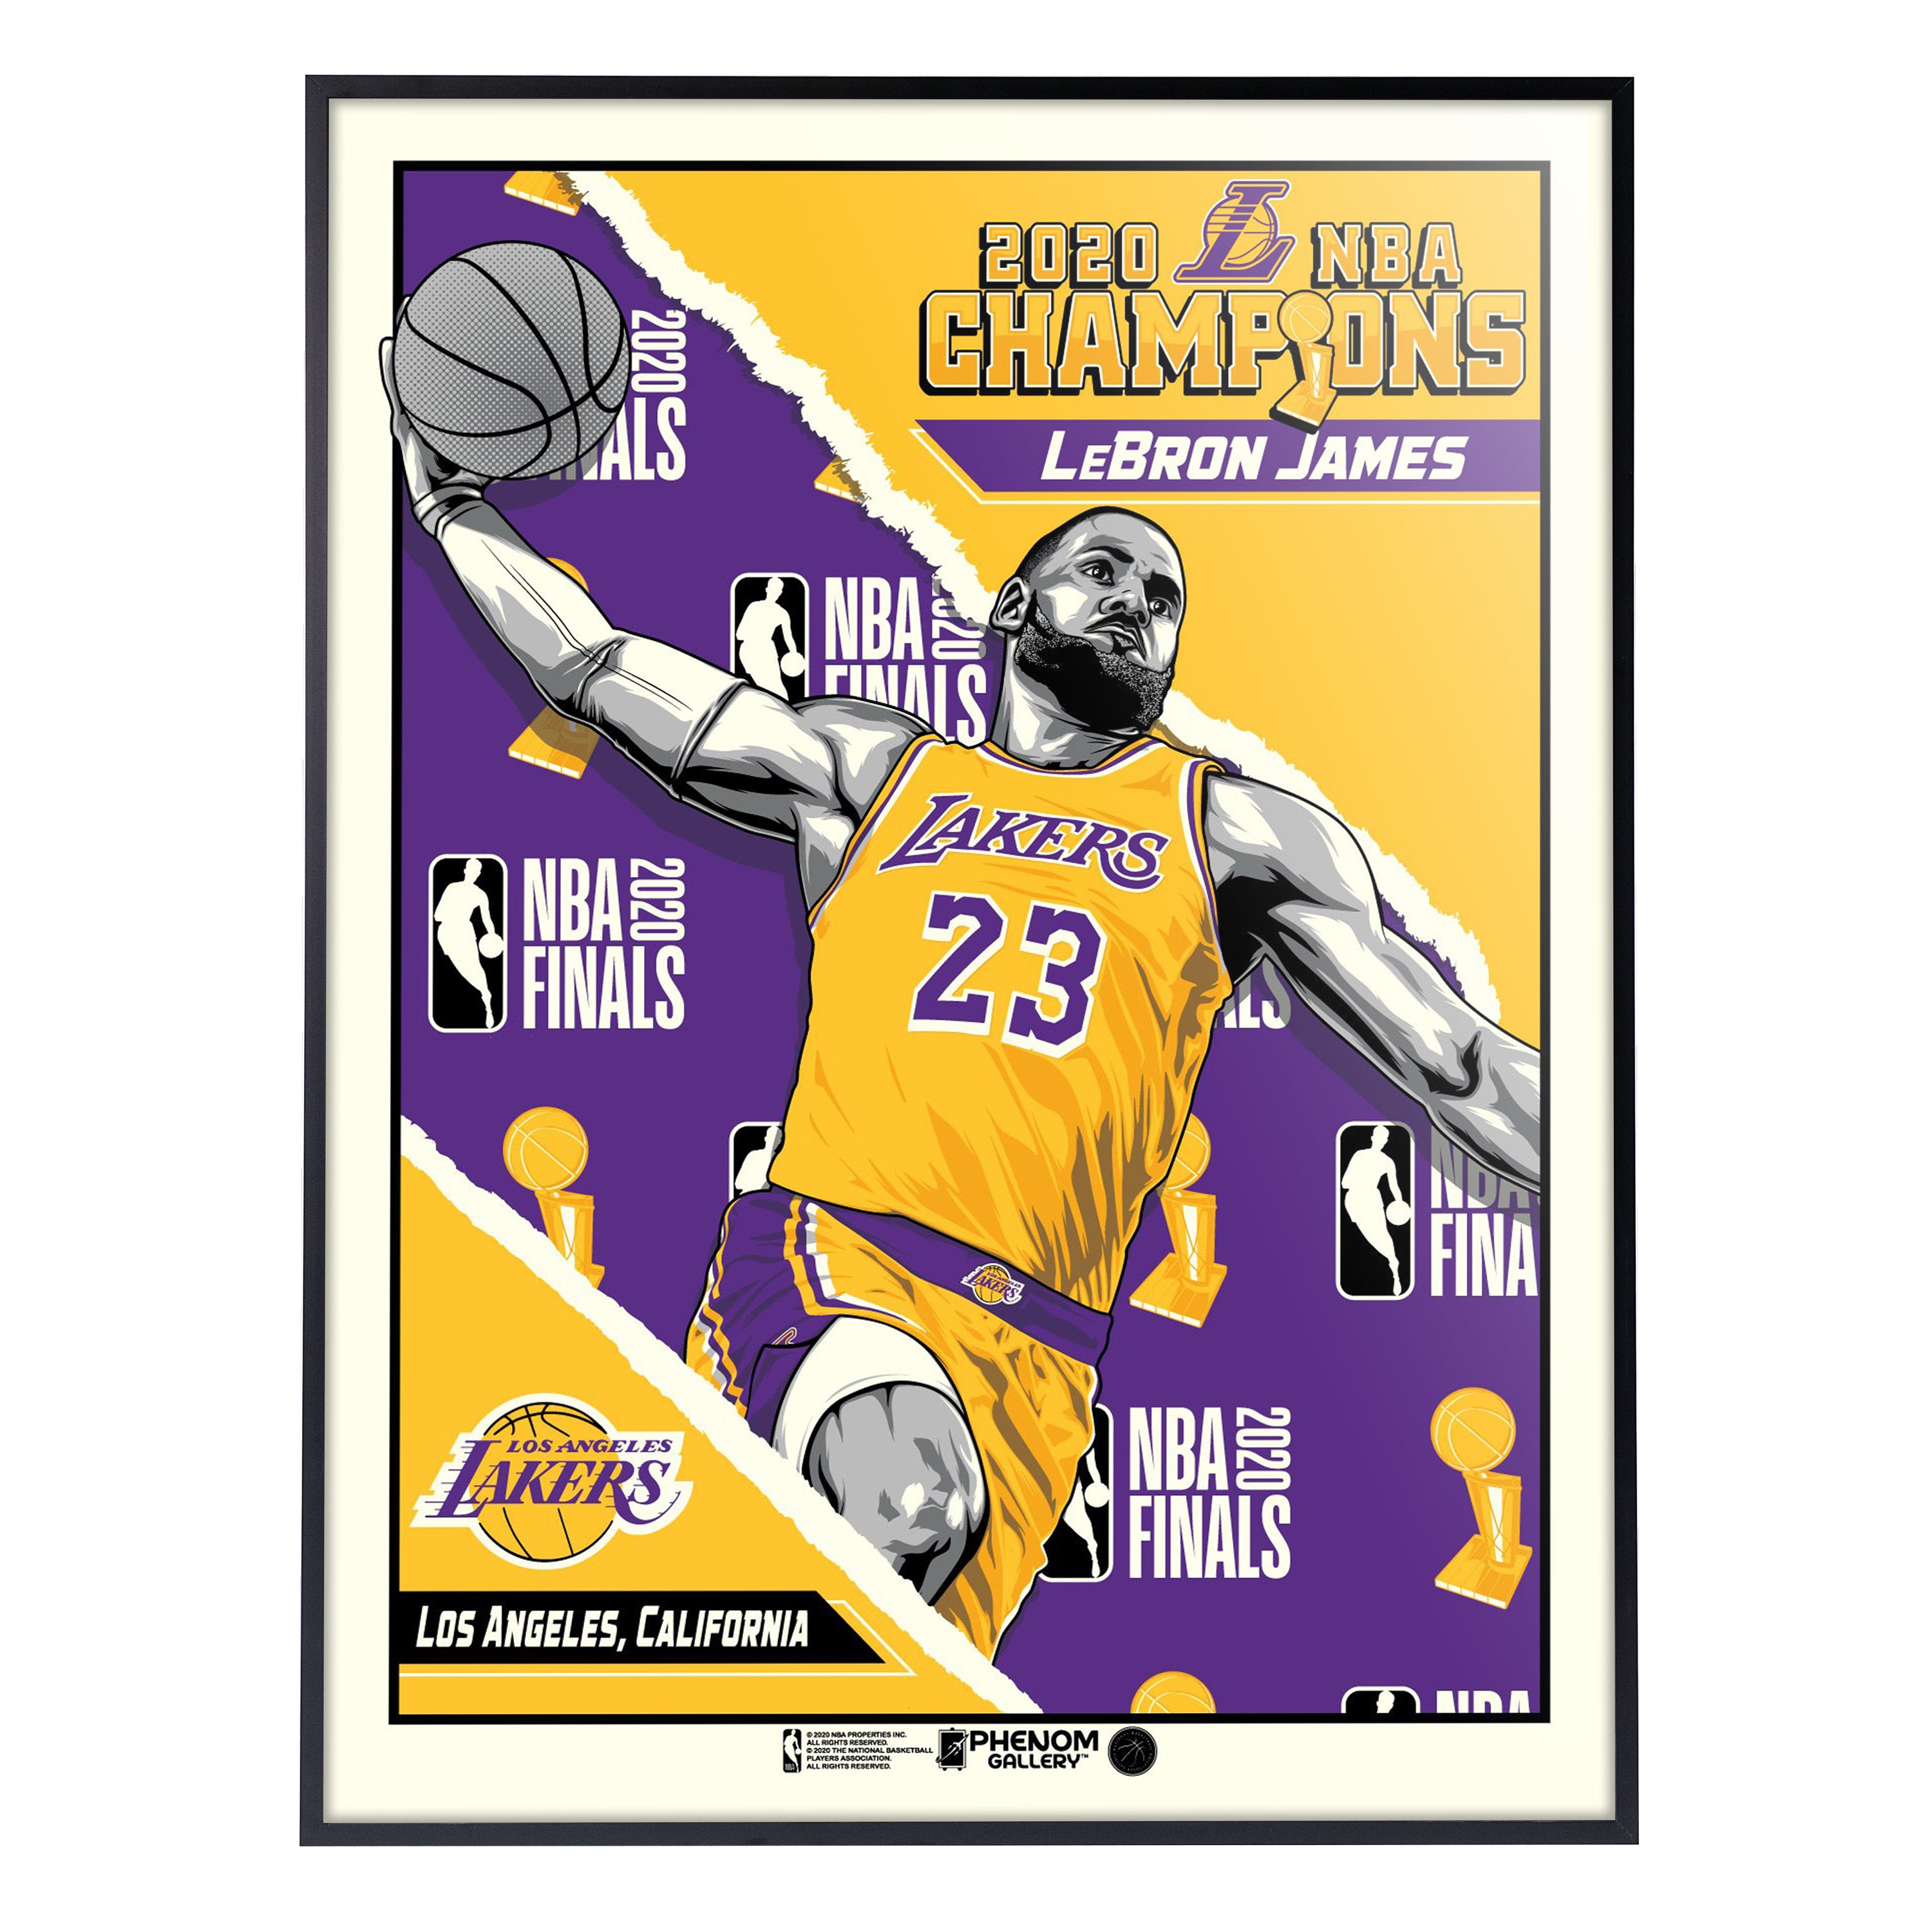 NEW YORK, USA, JUN 18, 2020: Los Angeles Lakers logo of